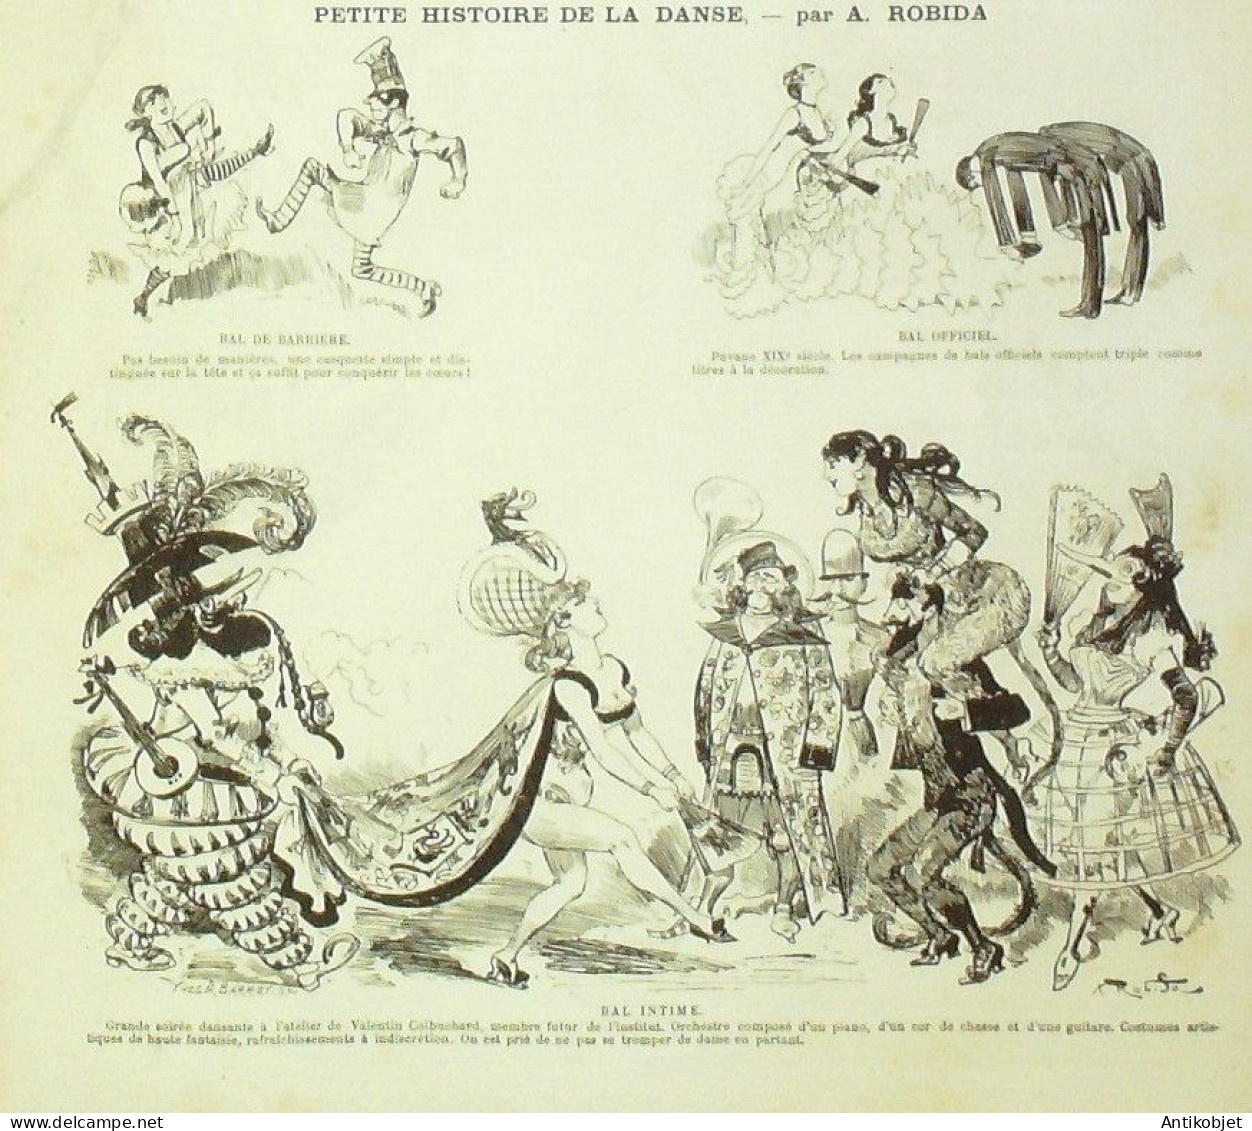 La Caricature 1882 N°117 Feu Mabille La Danse Robida - Magazines - Before 1900